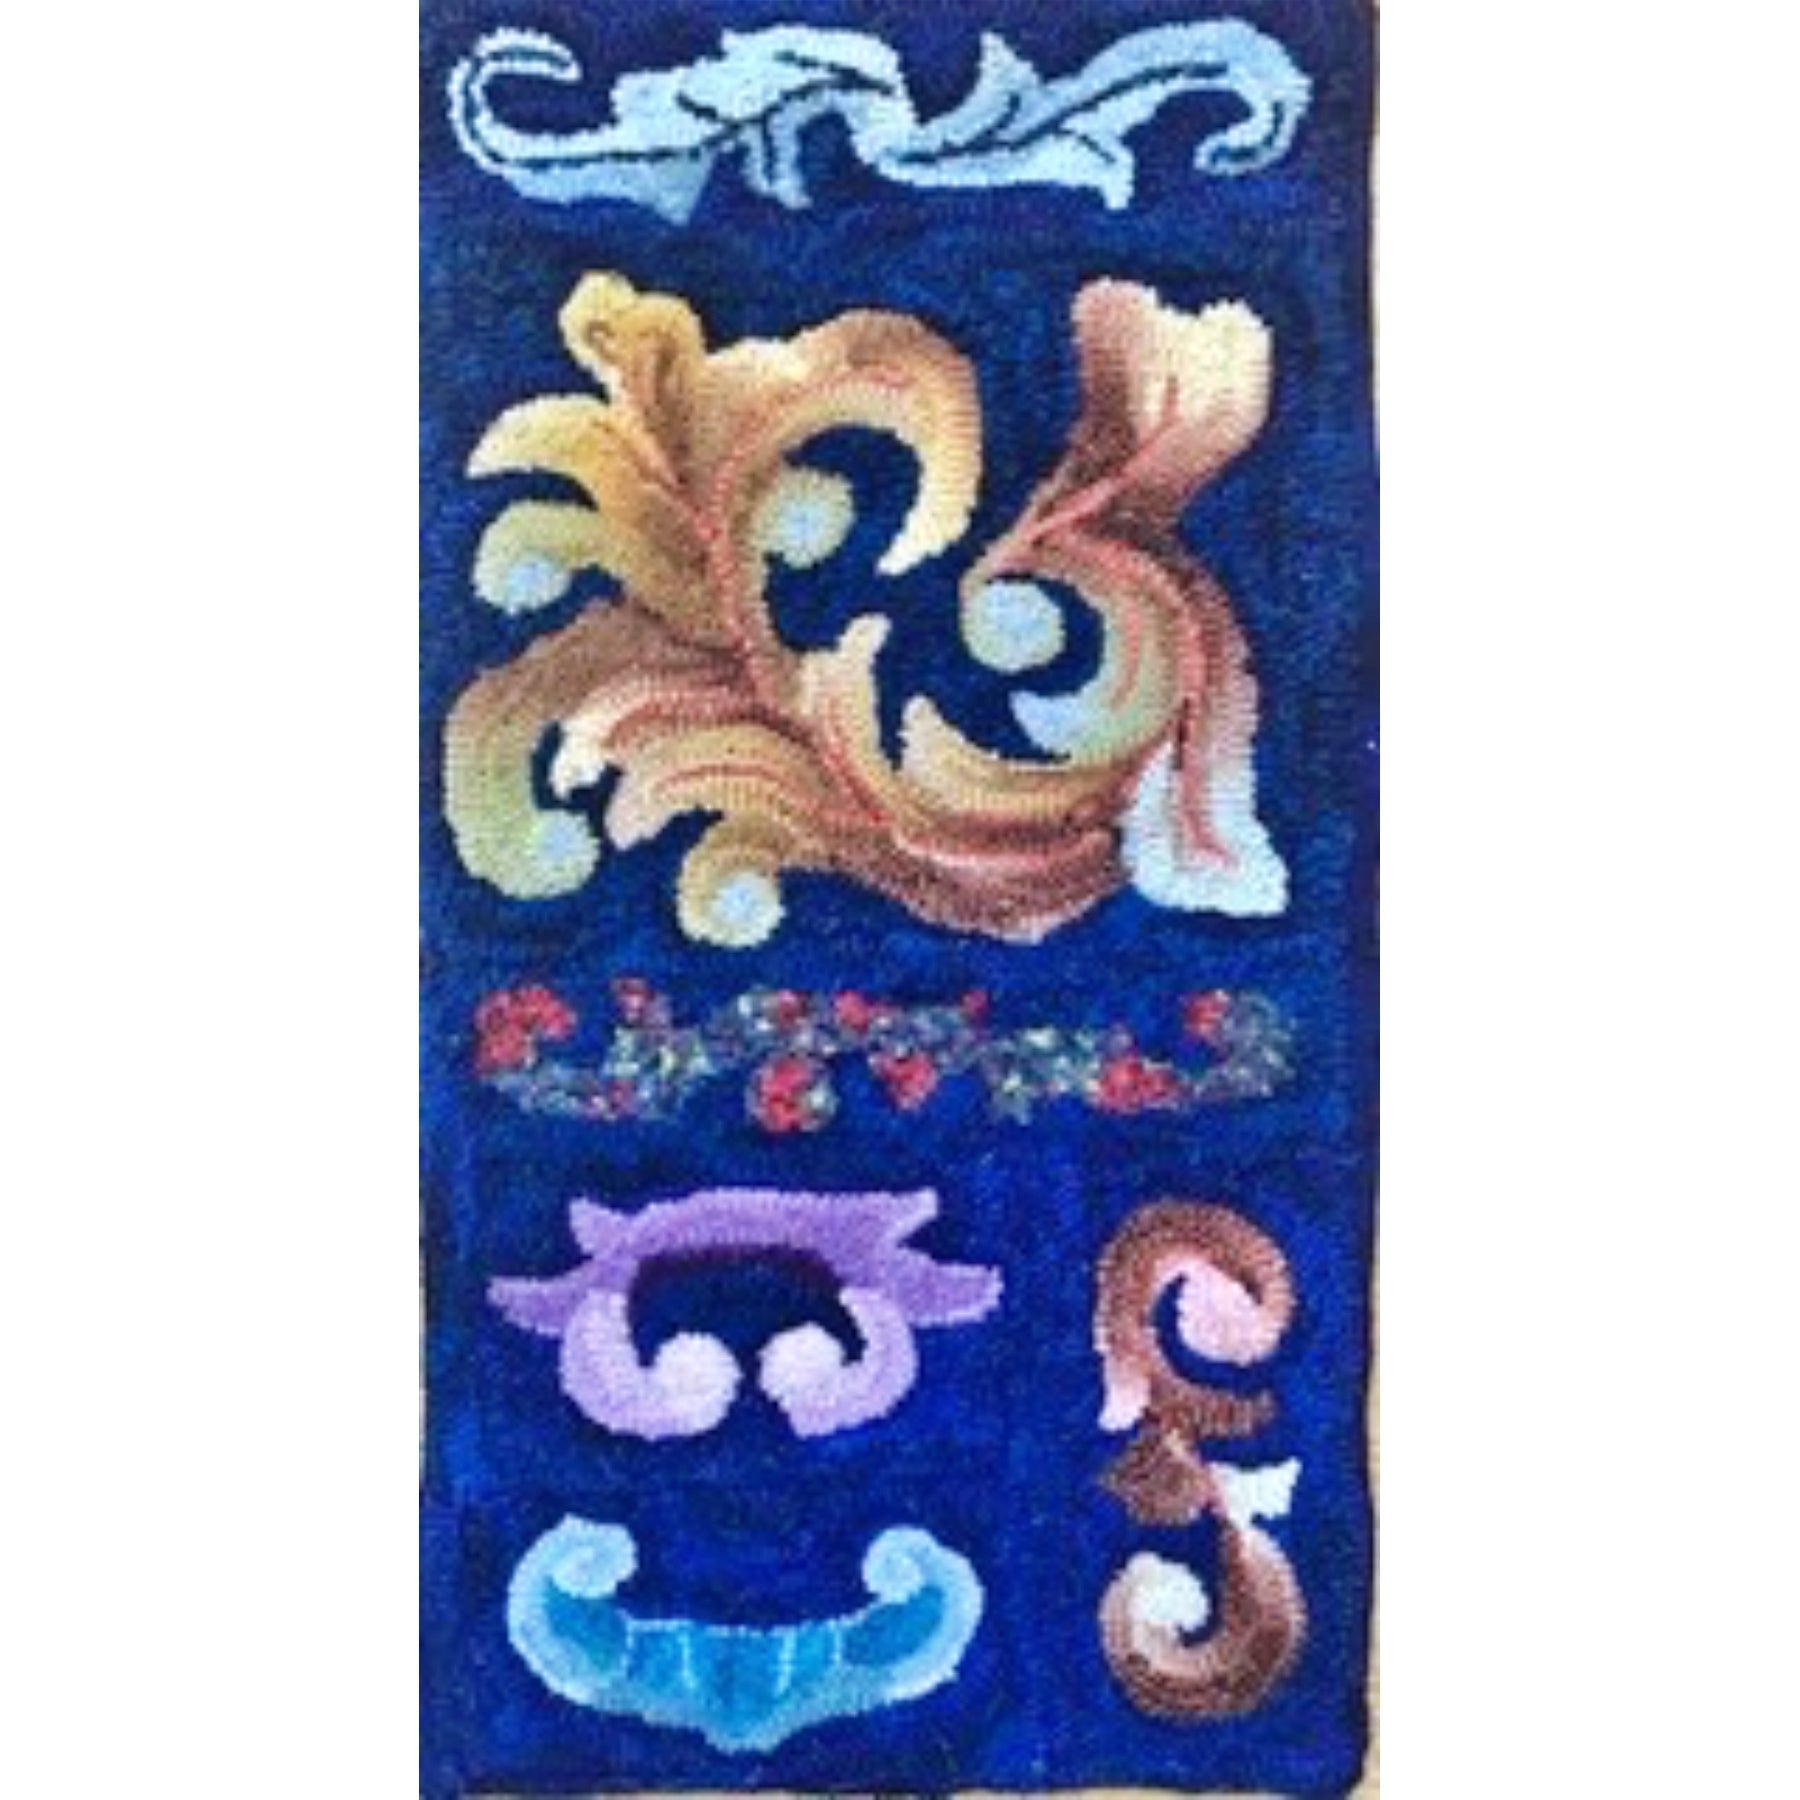 Scroll Sampler, rug hooked by Vicki Rudolph